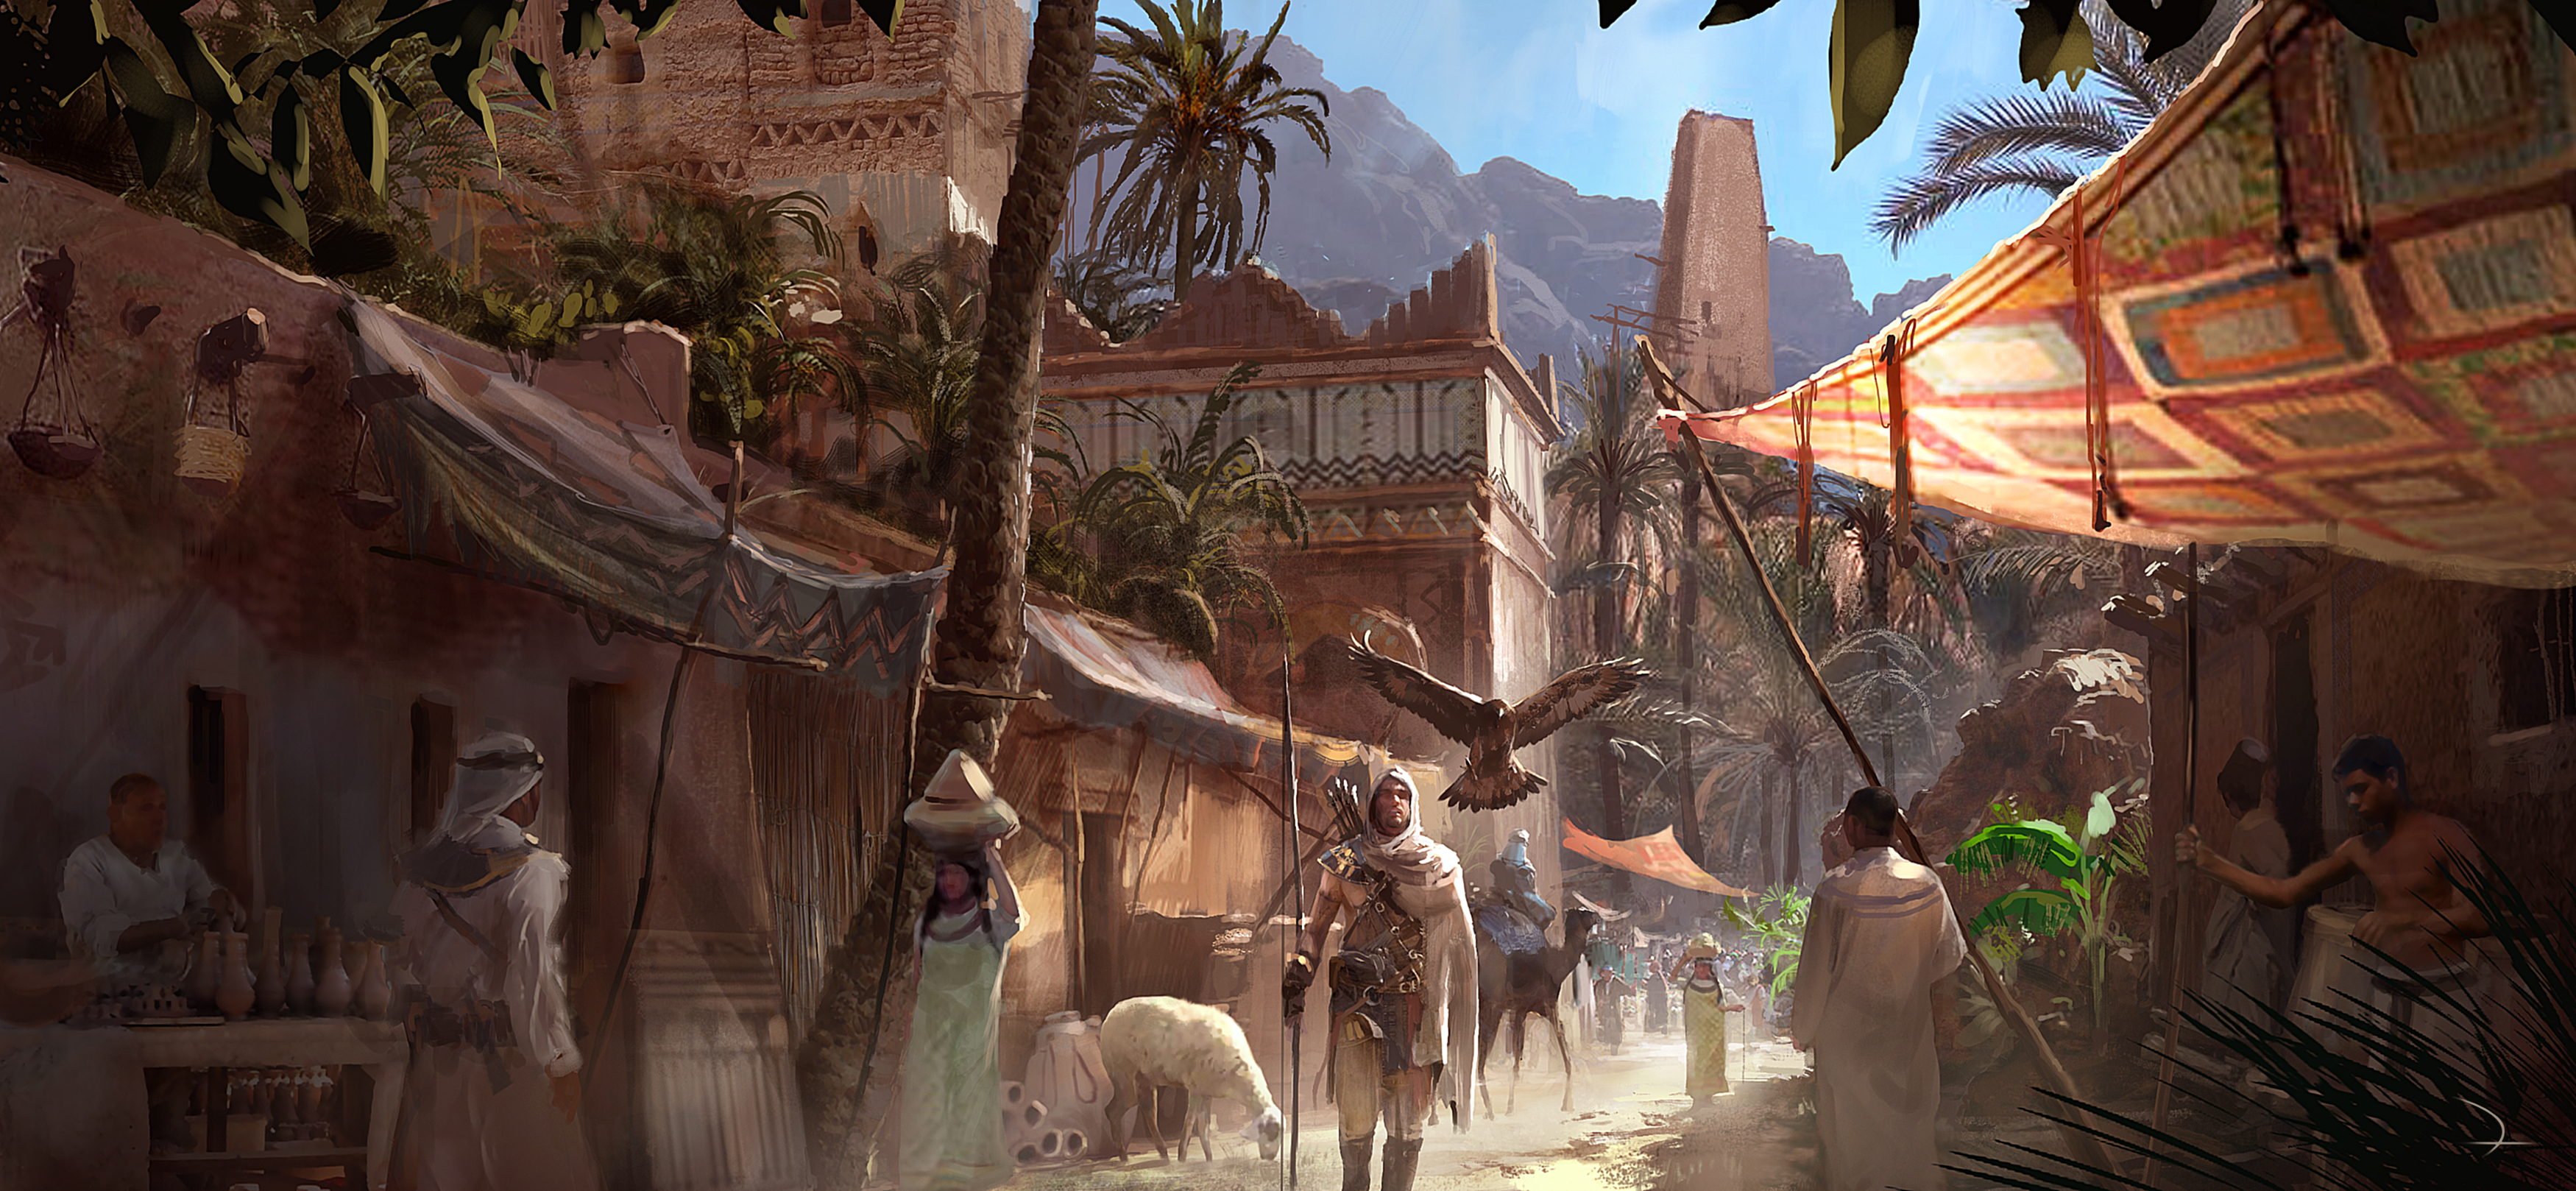 Assassins Creed - Pravda a fikce aneb Okénko do historie